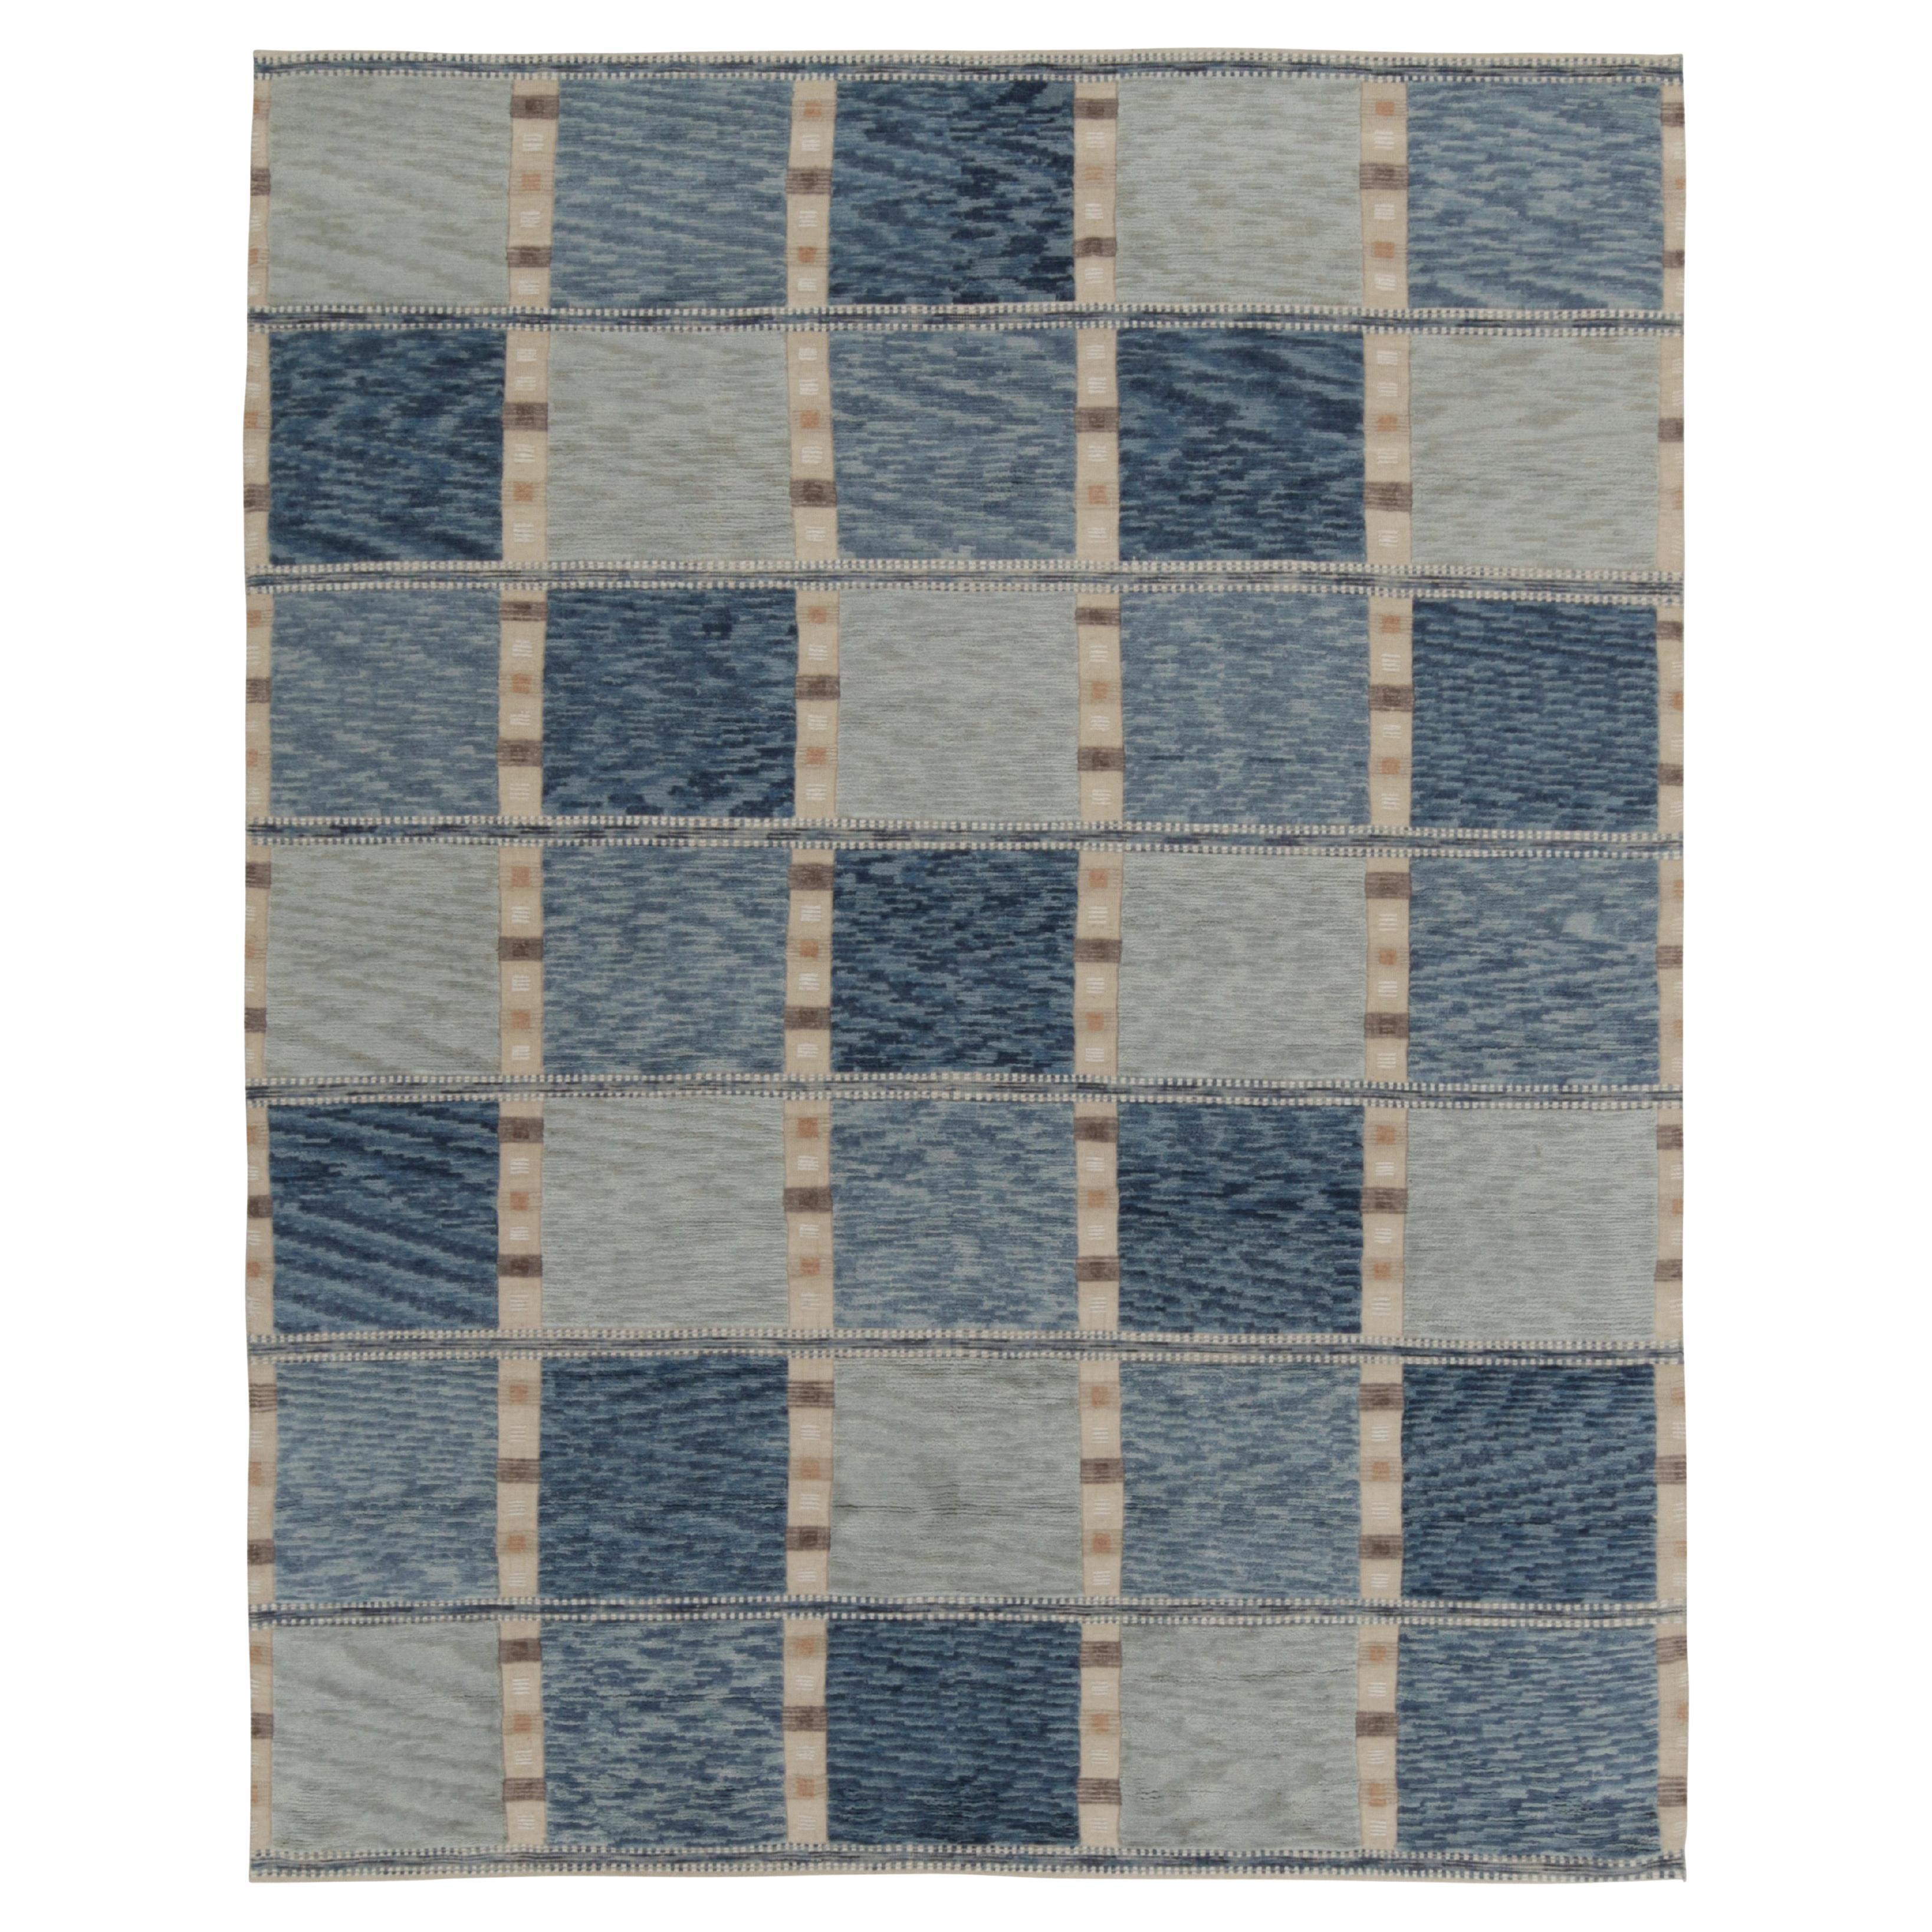 Rug & Kilim’s Scandinavian Style Rug in Blue and Beige-Brown Geometric Patterns